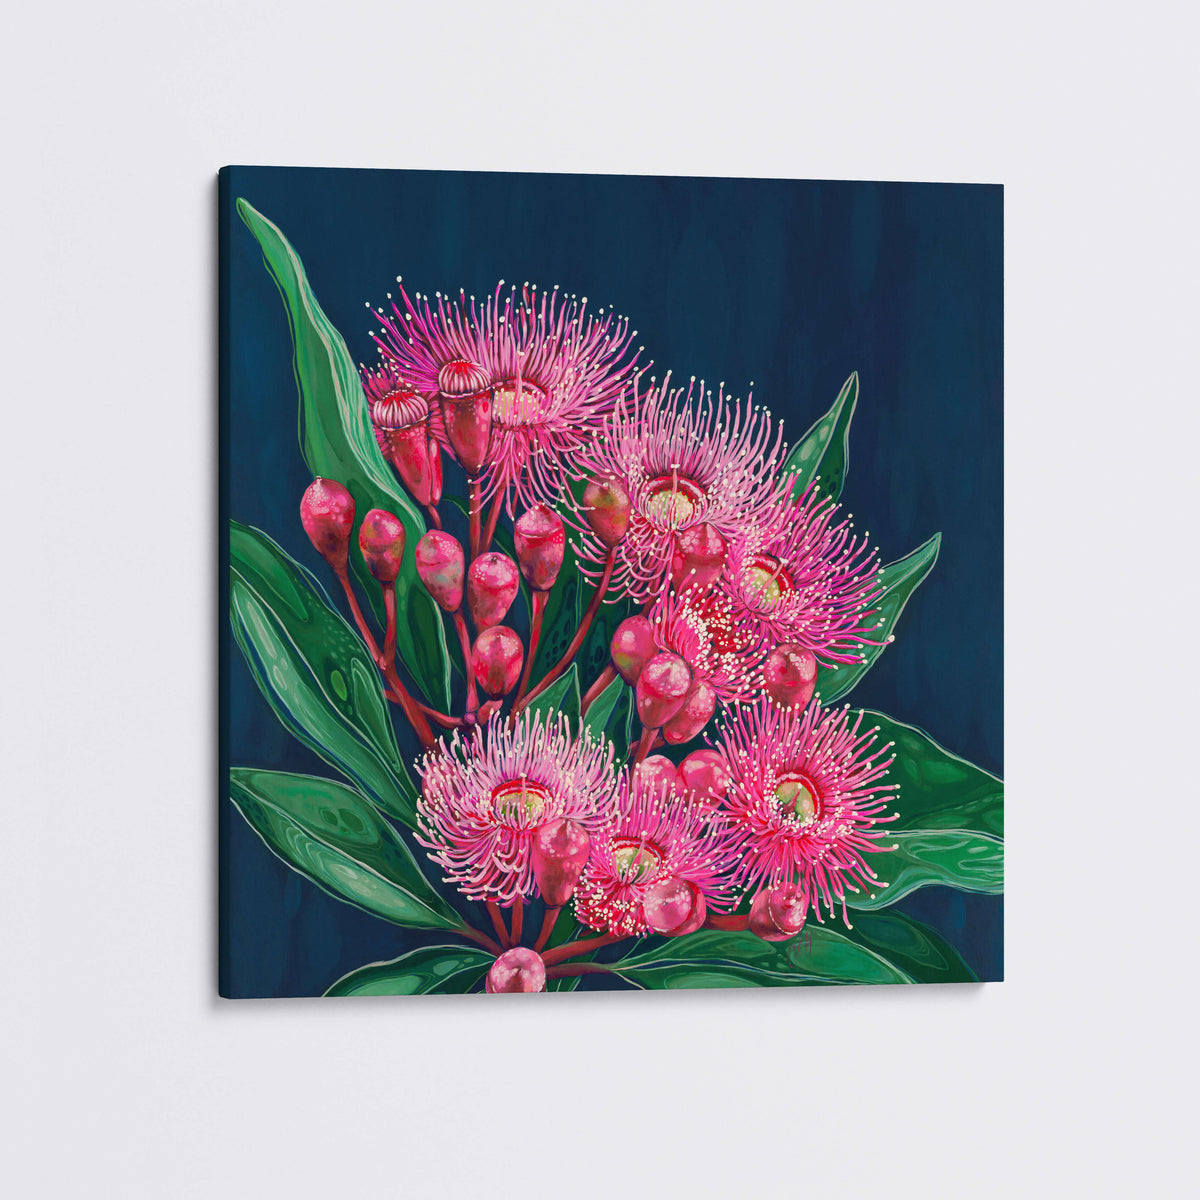 &#39;Midnight Flowering Gum&#39; canvas print